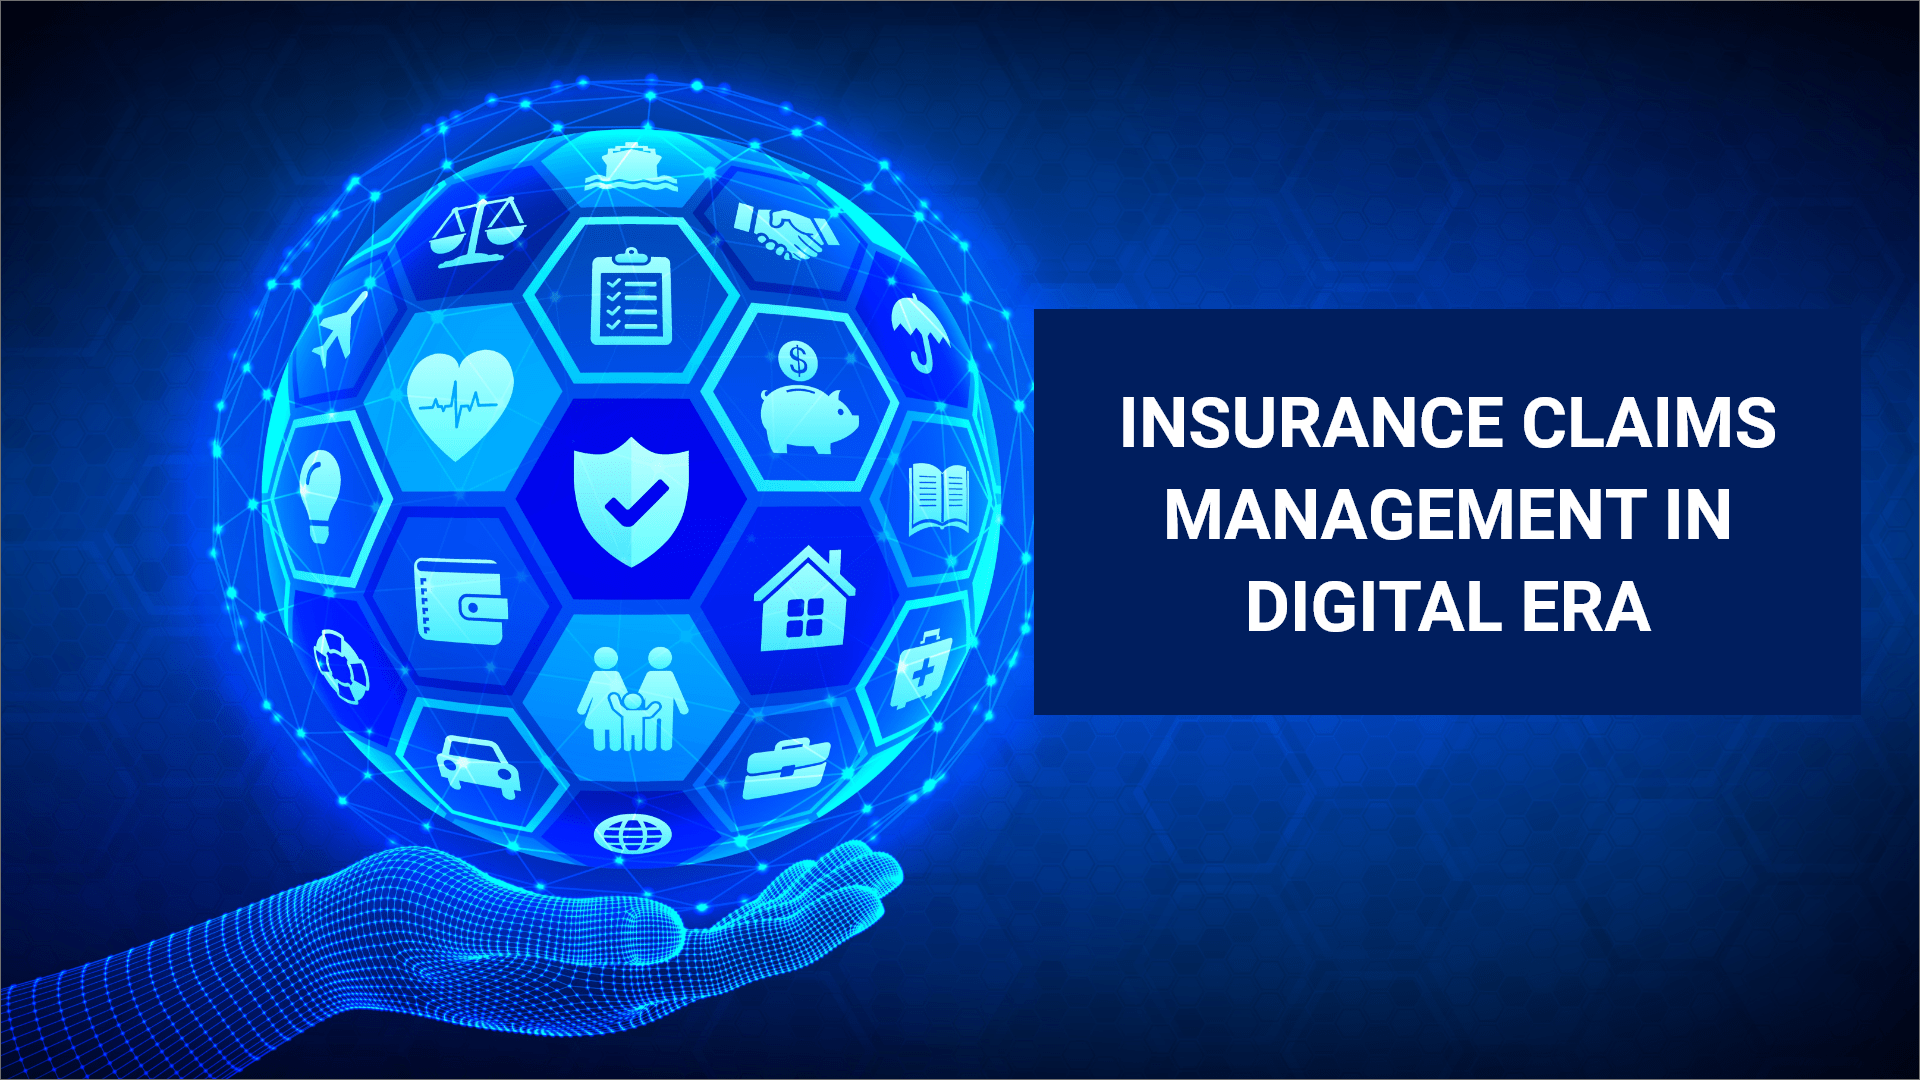 Insurance Claims Management in Digital Era - 47Billion